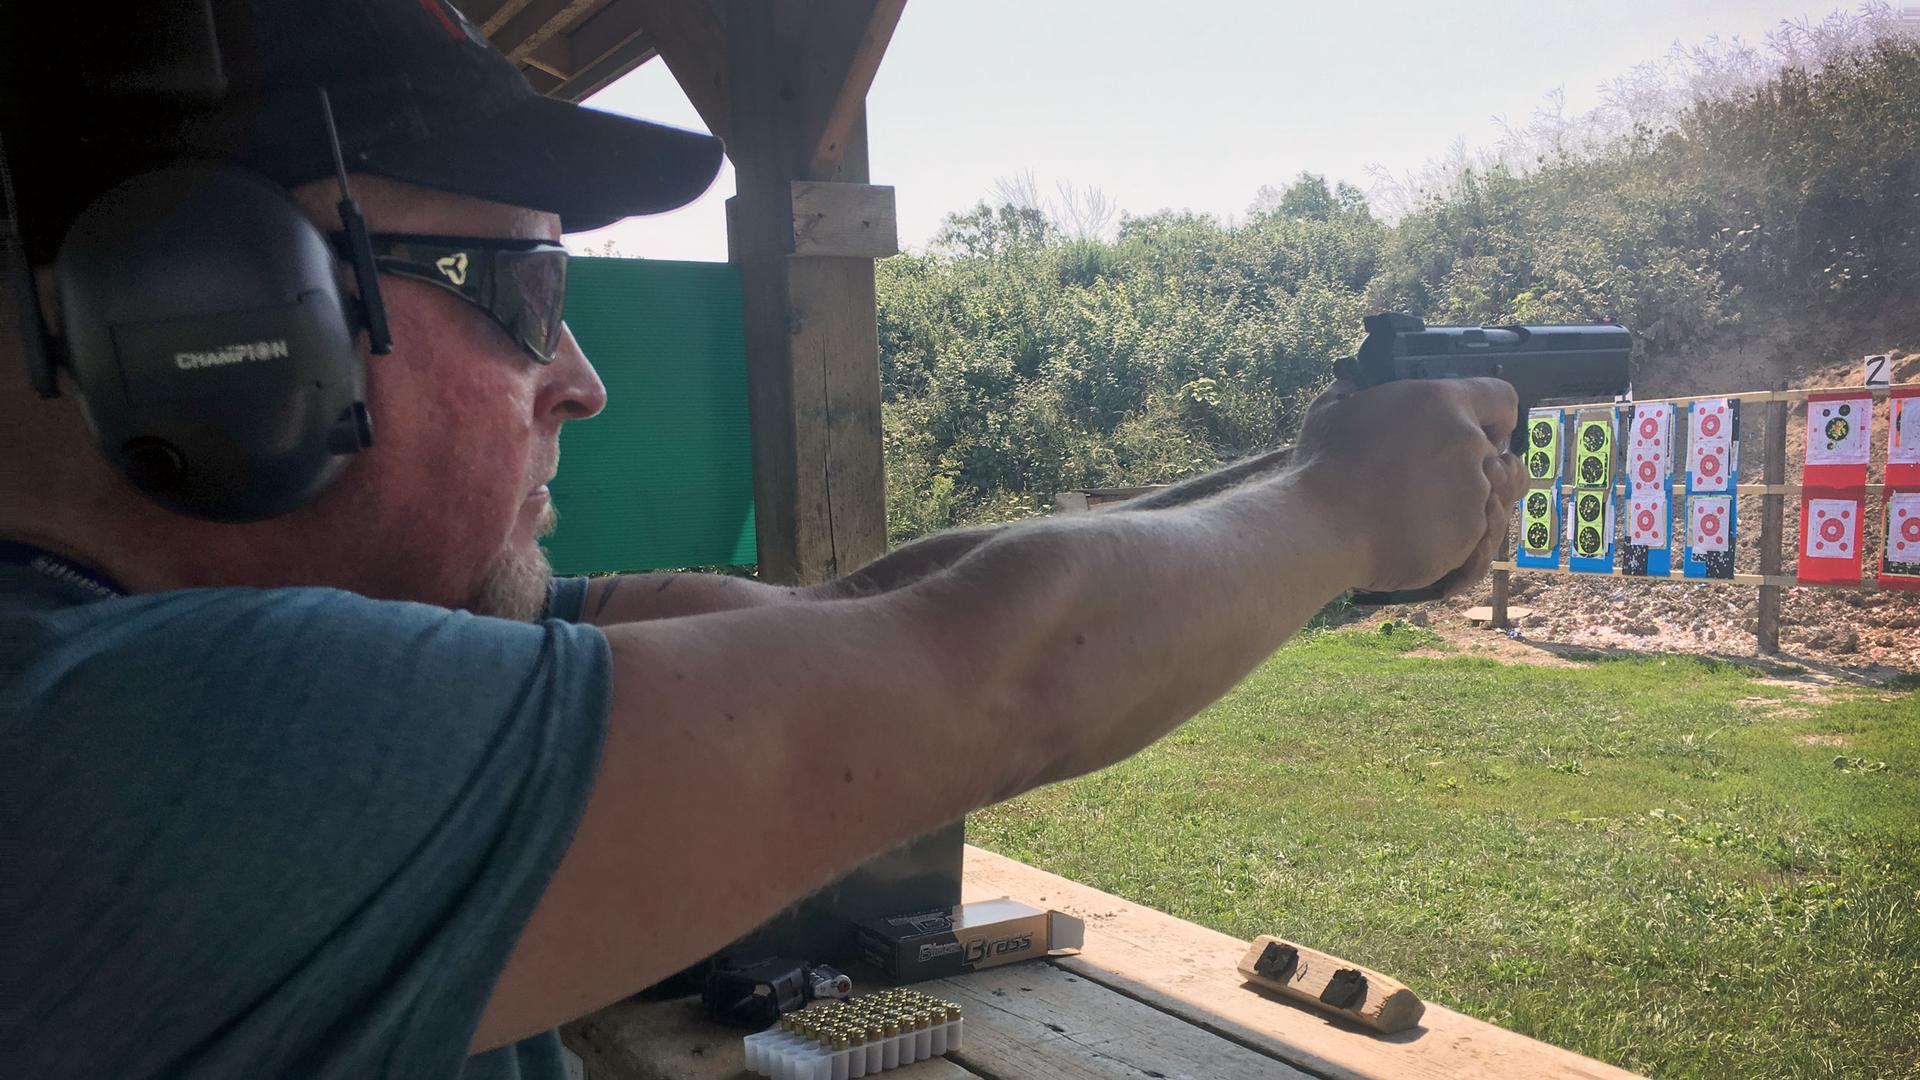 A man points a handgun at a target on a shooting range